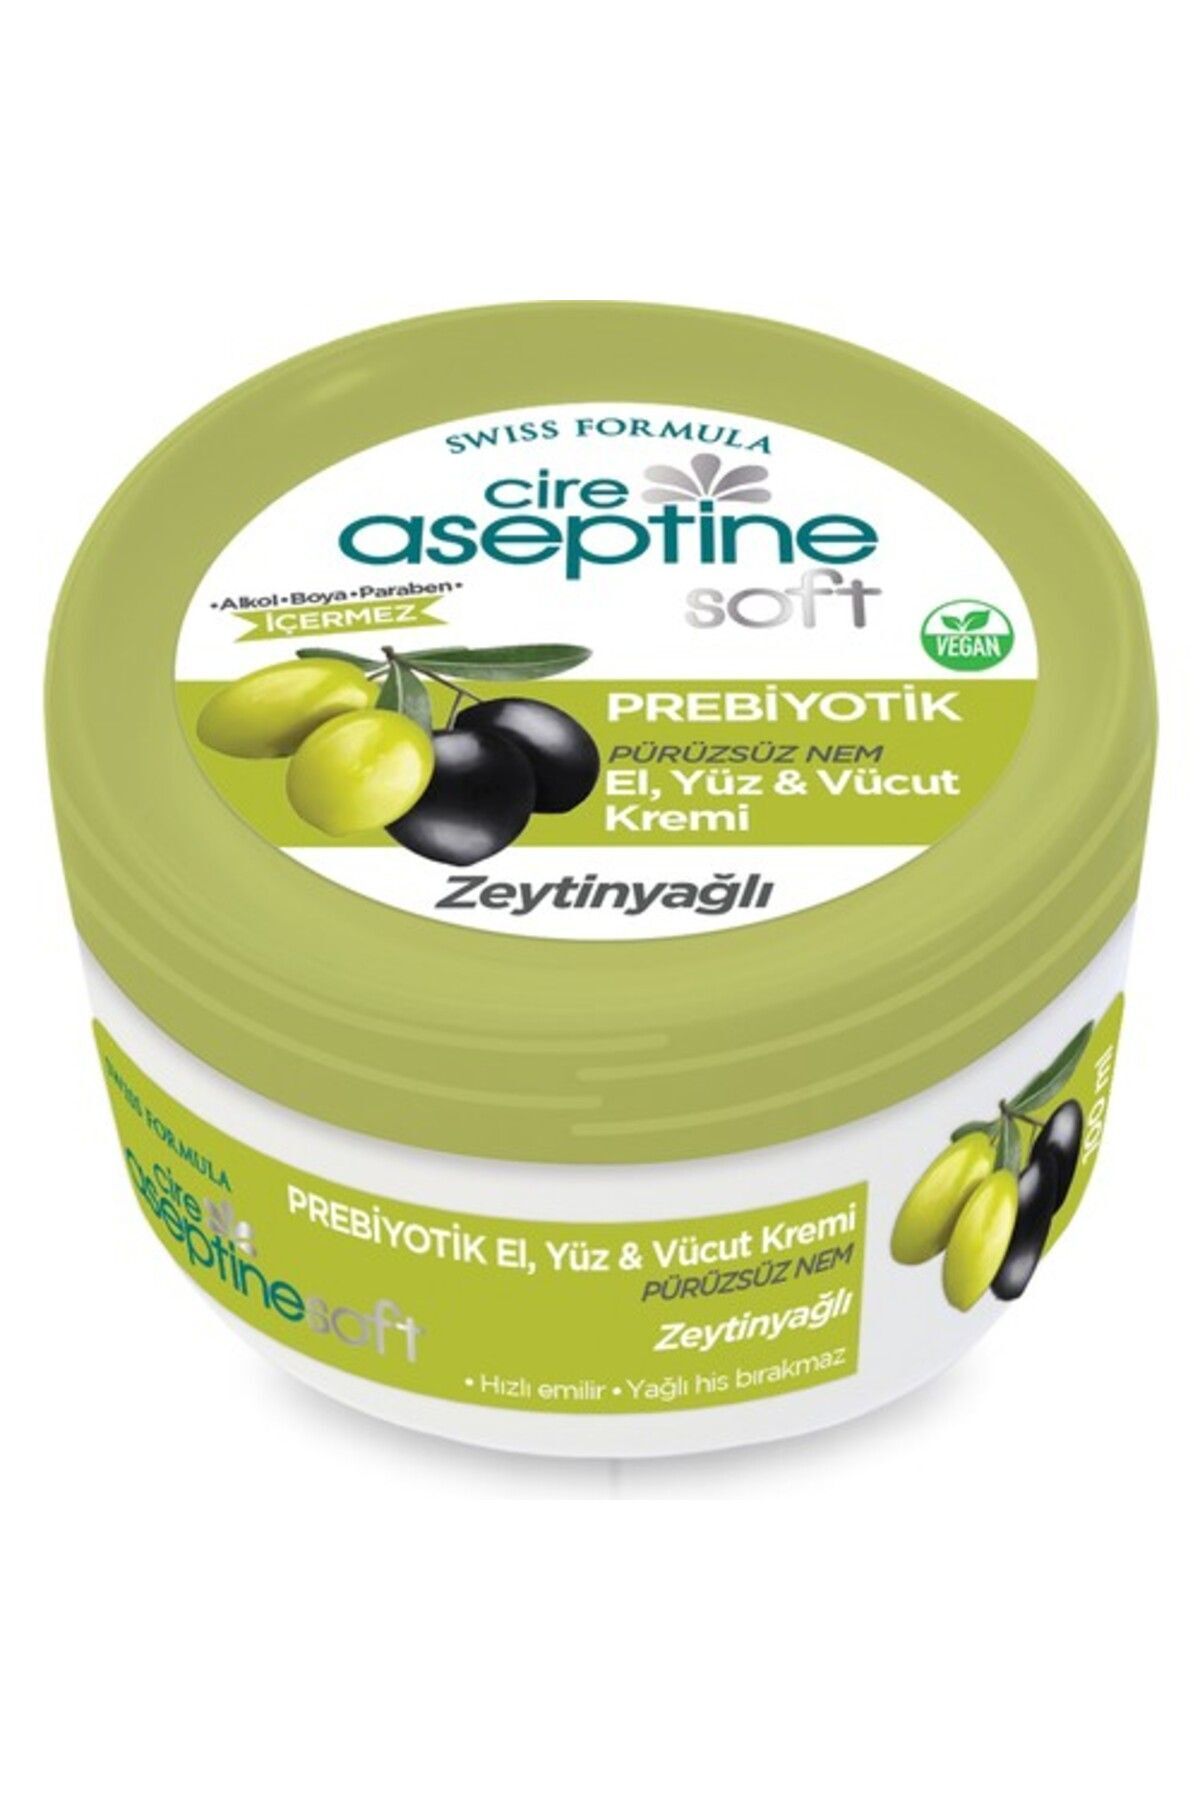 Cire Aseptine Cireaseptine Soft Zeytinyağ 100 ml Krem